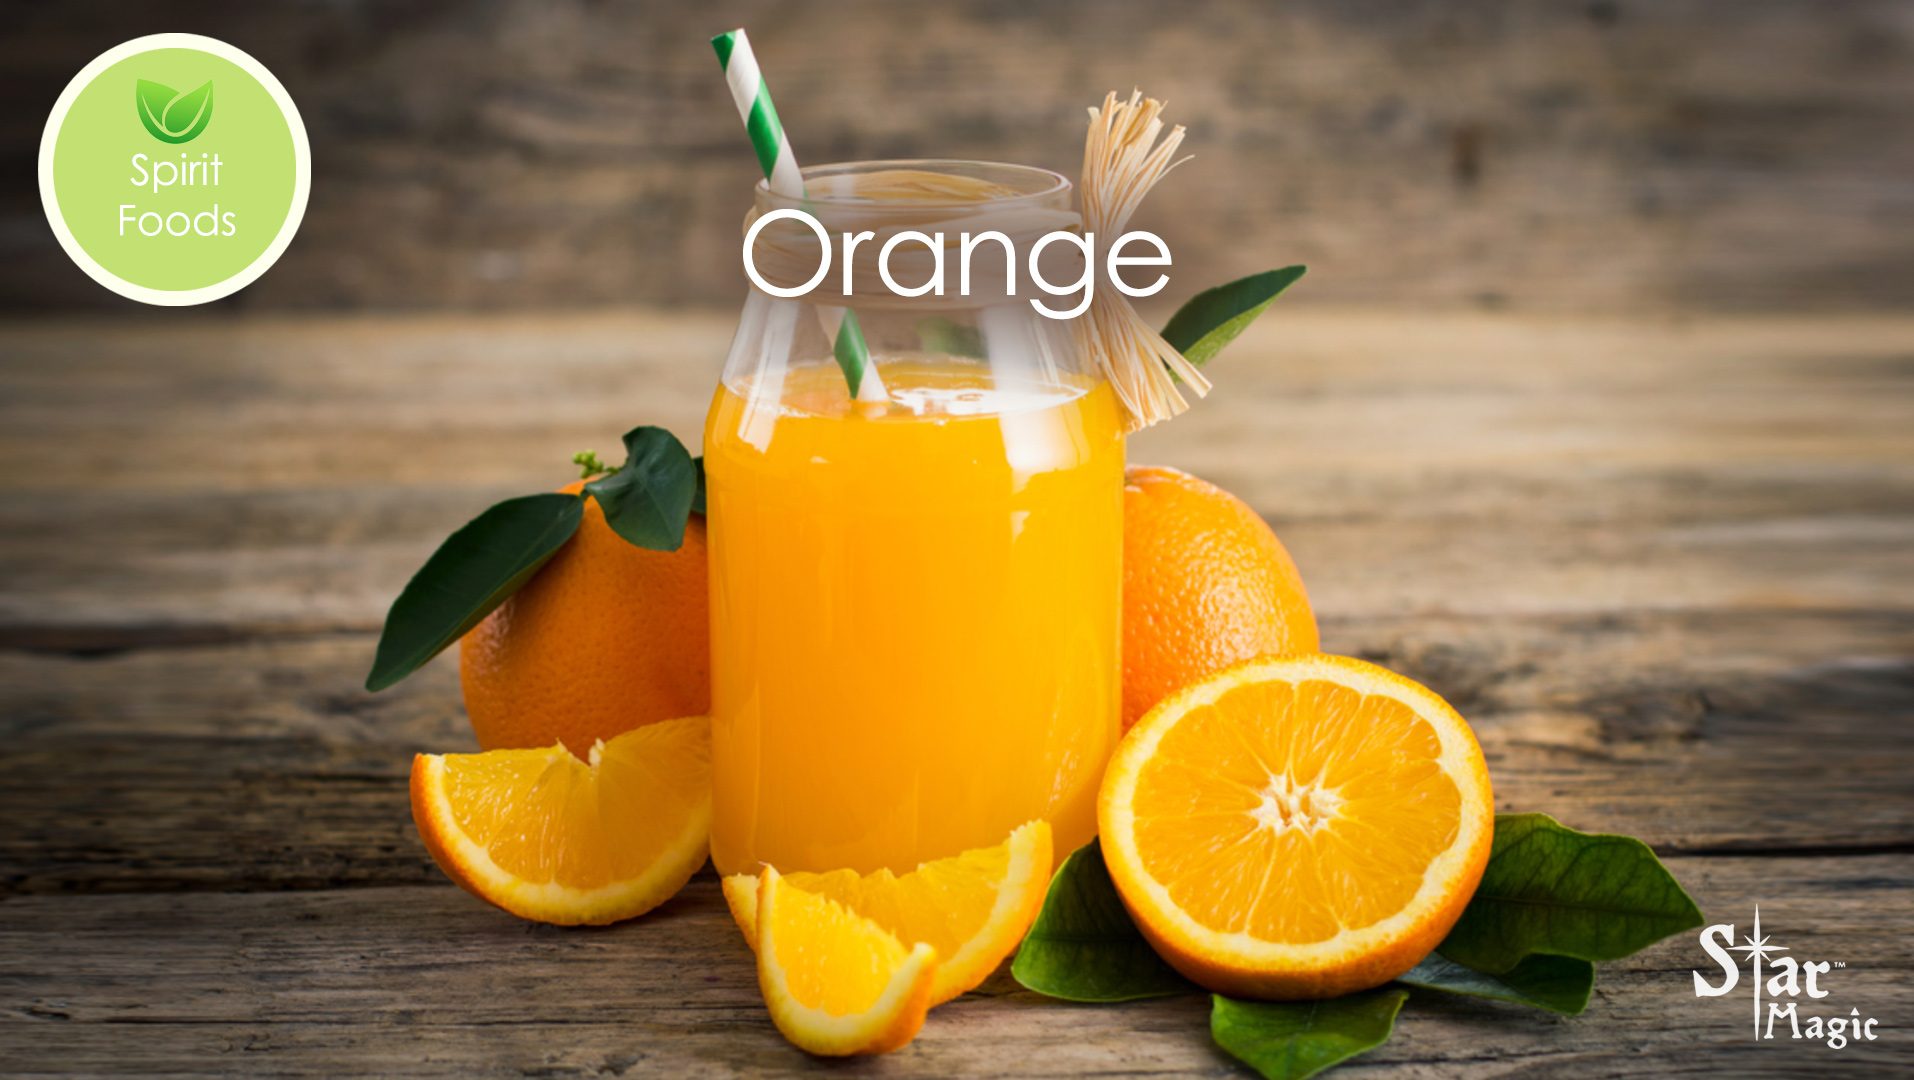 Spirit Food – Orange